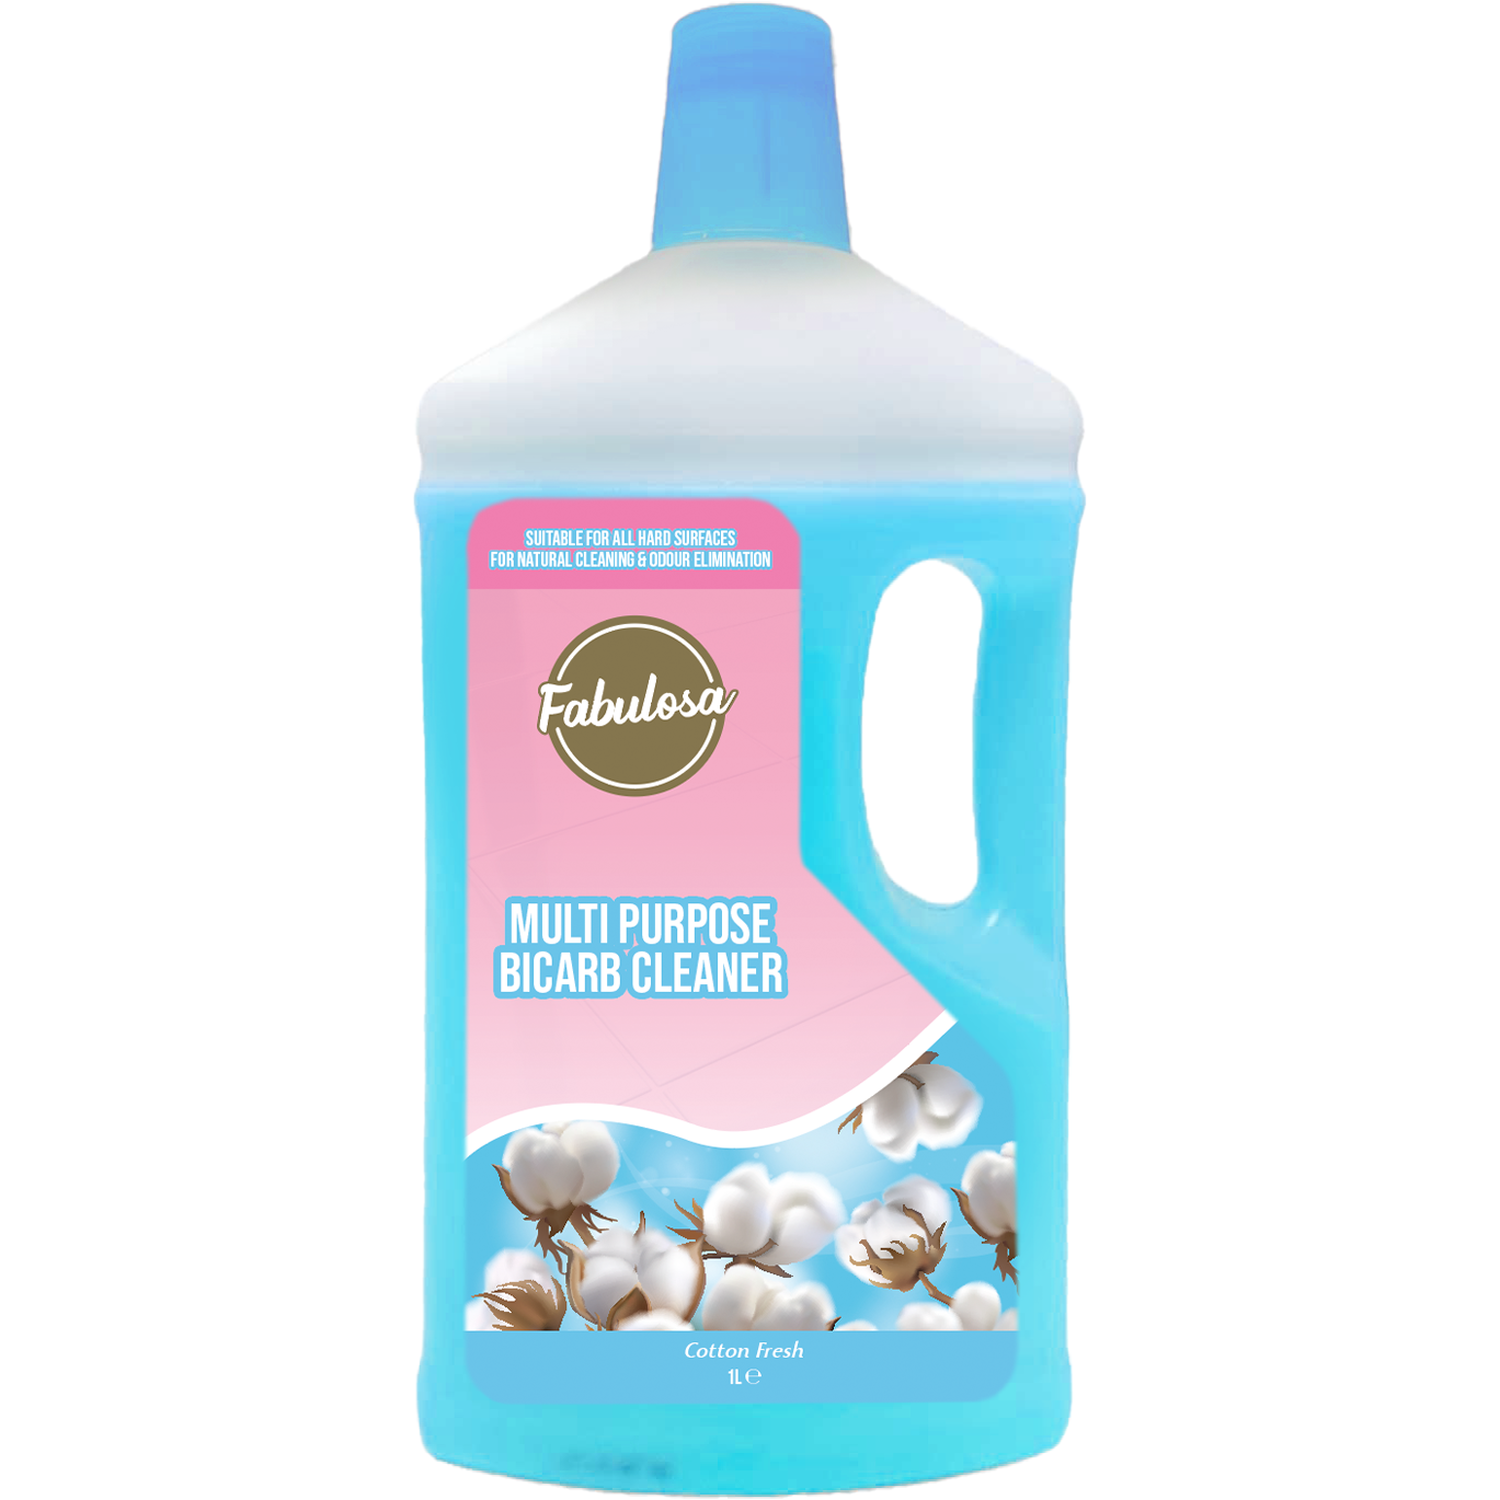 Fabulosa Multipurpose Bicarb Cleaner 1L - Cotton Fresh Image